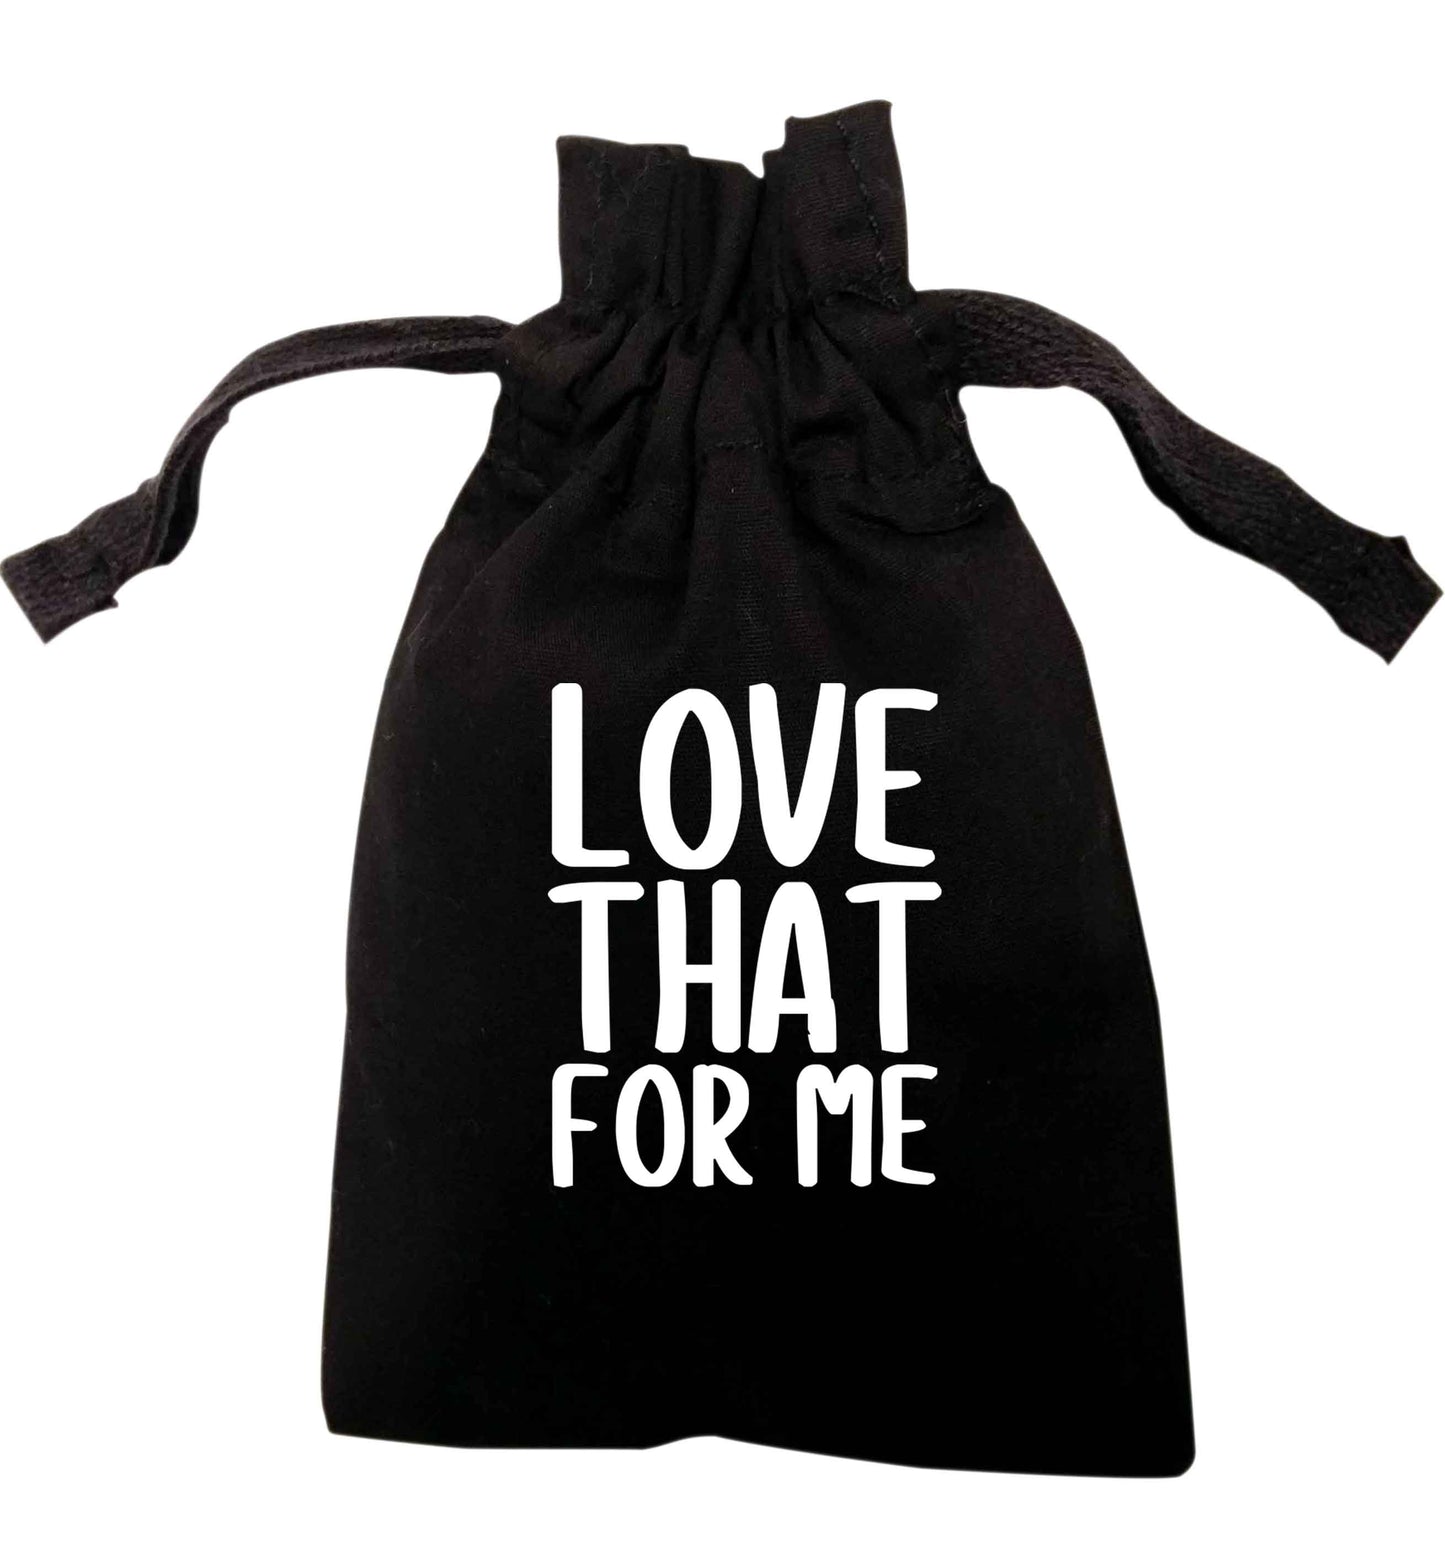 Love that for me | XS - L | Pouch / Drawstring bag / Sack | Organic Cotton | Bulk discounts available!